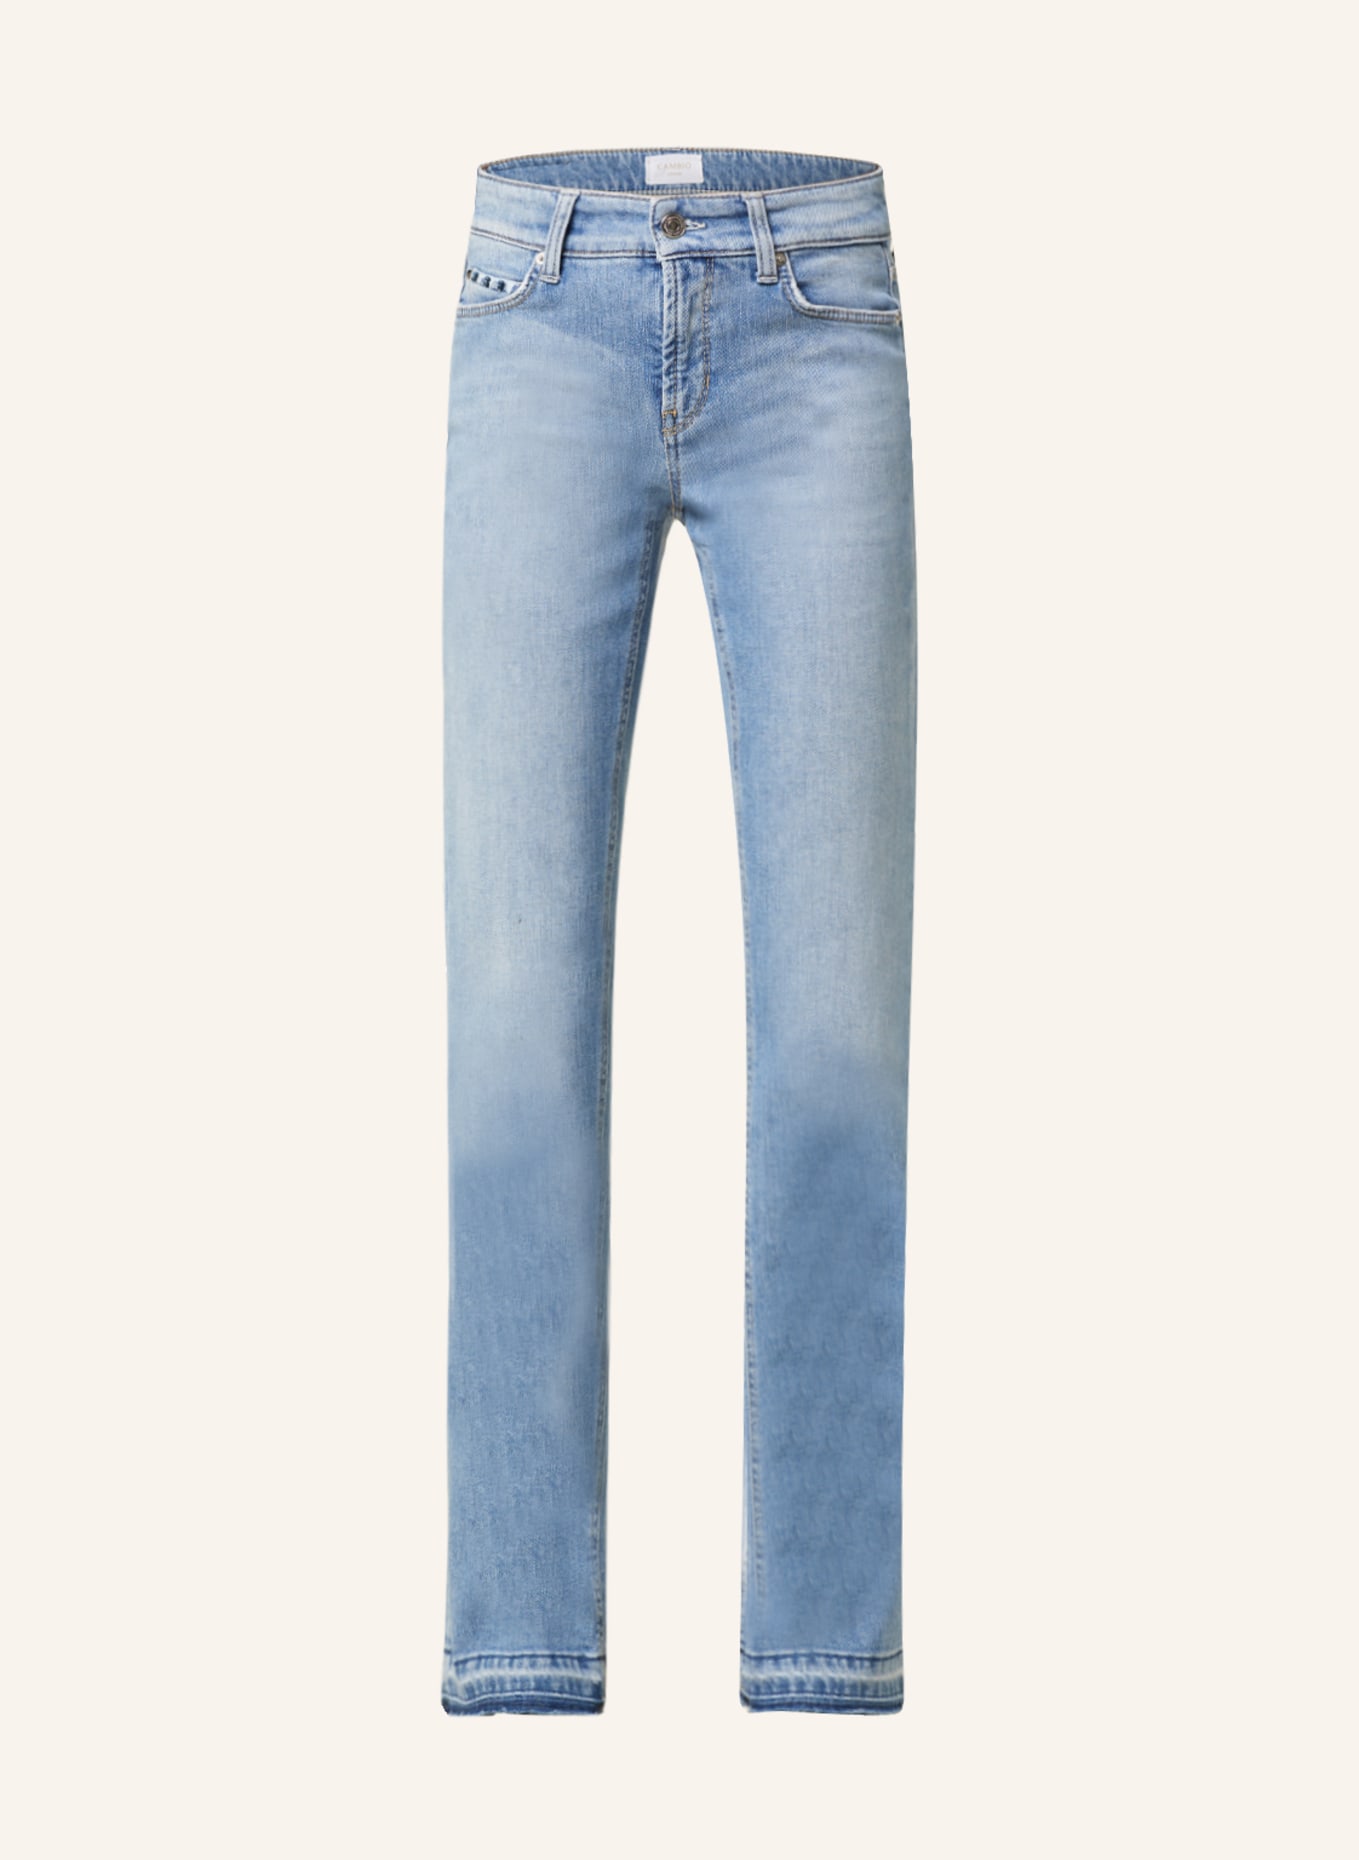 CAMBIO Flared Jeans PARIS, Farbe: 5212 light used open hem (Bild 1)